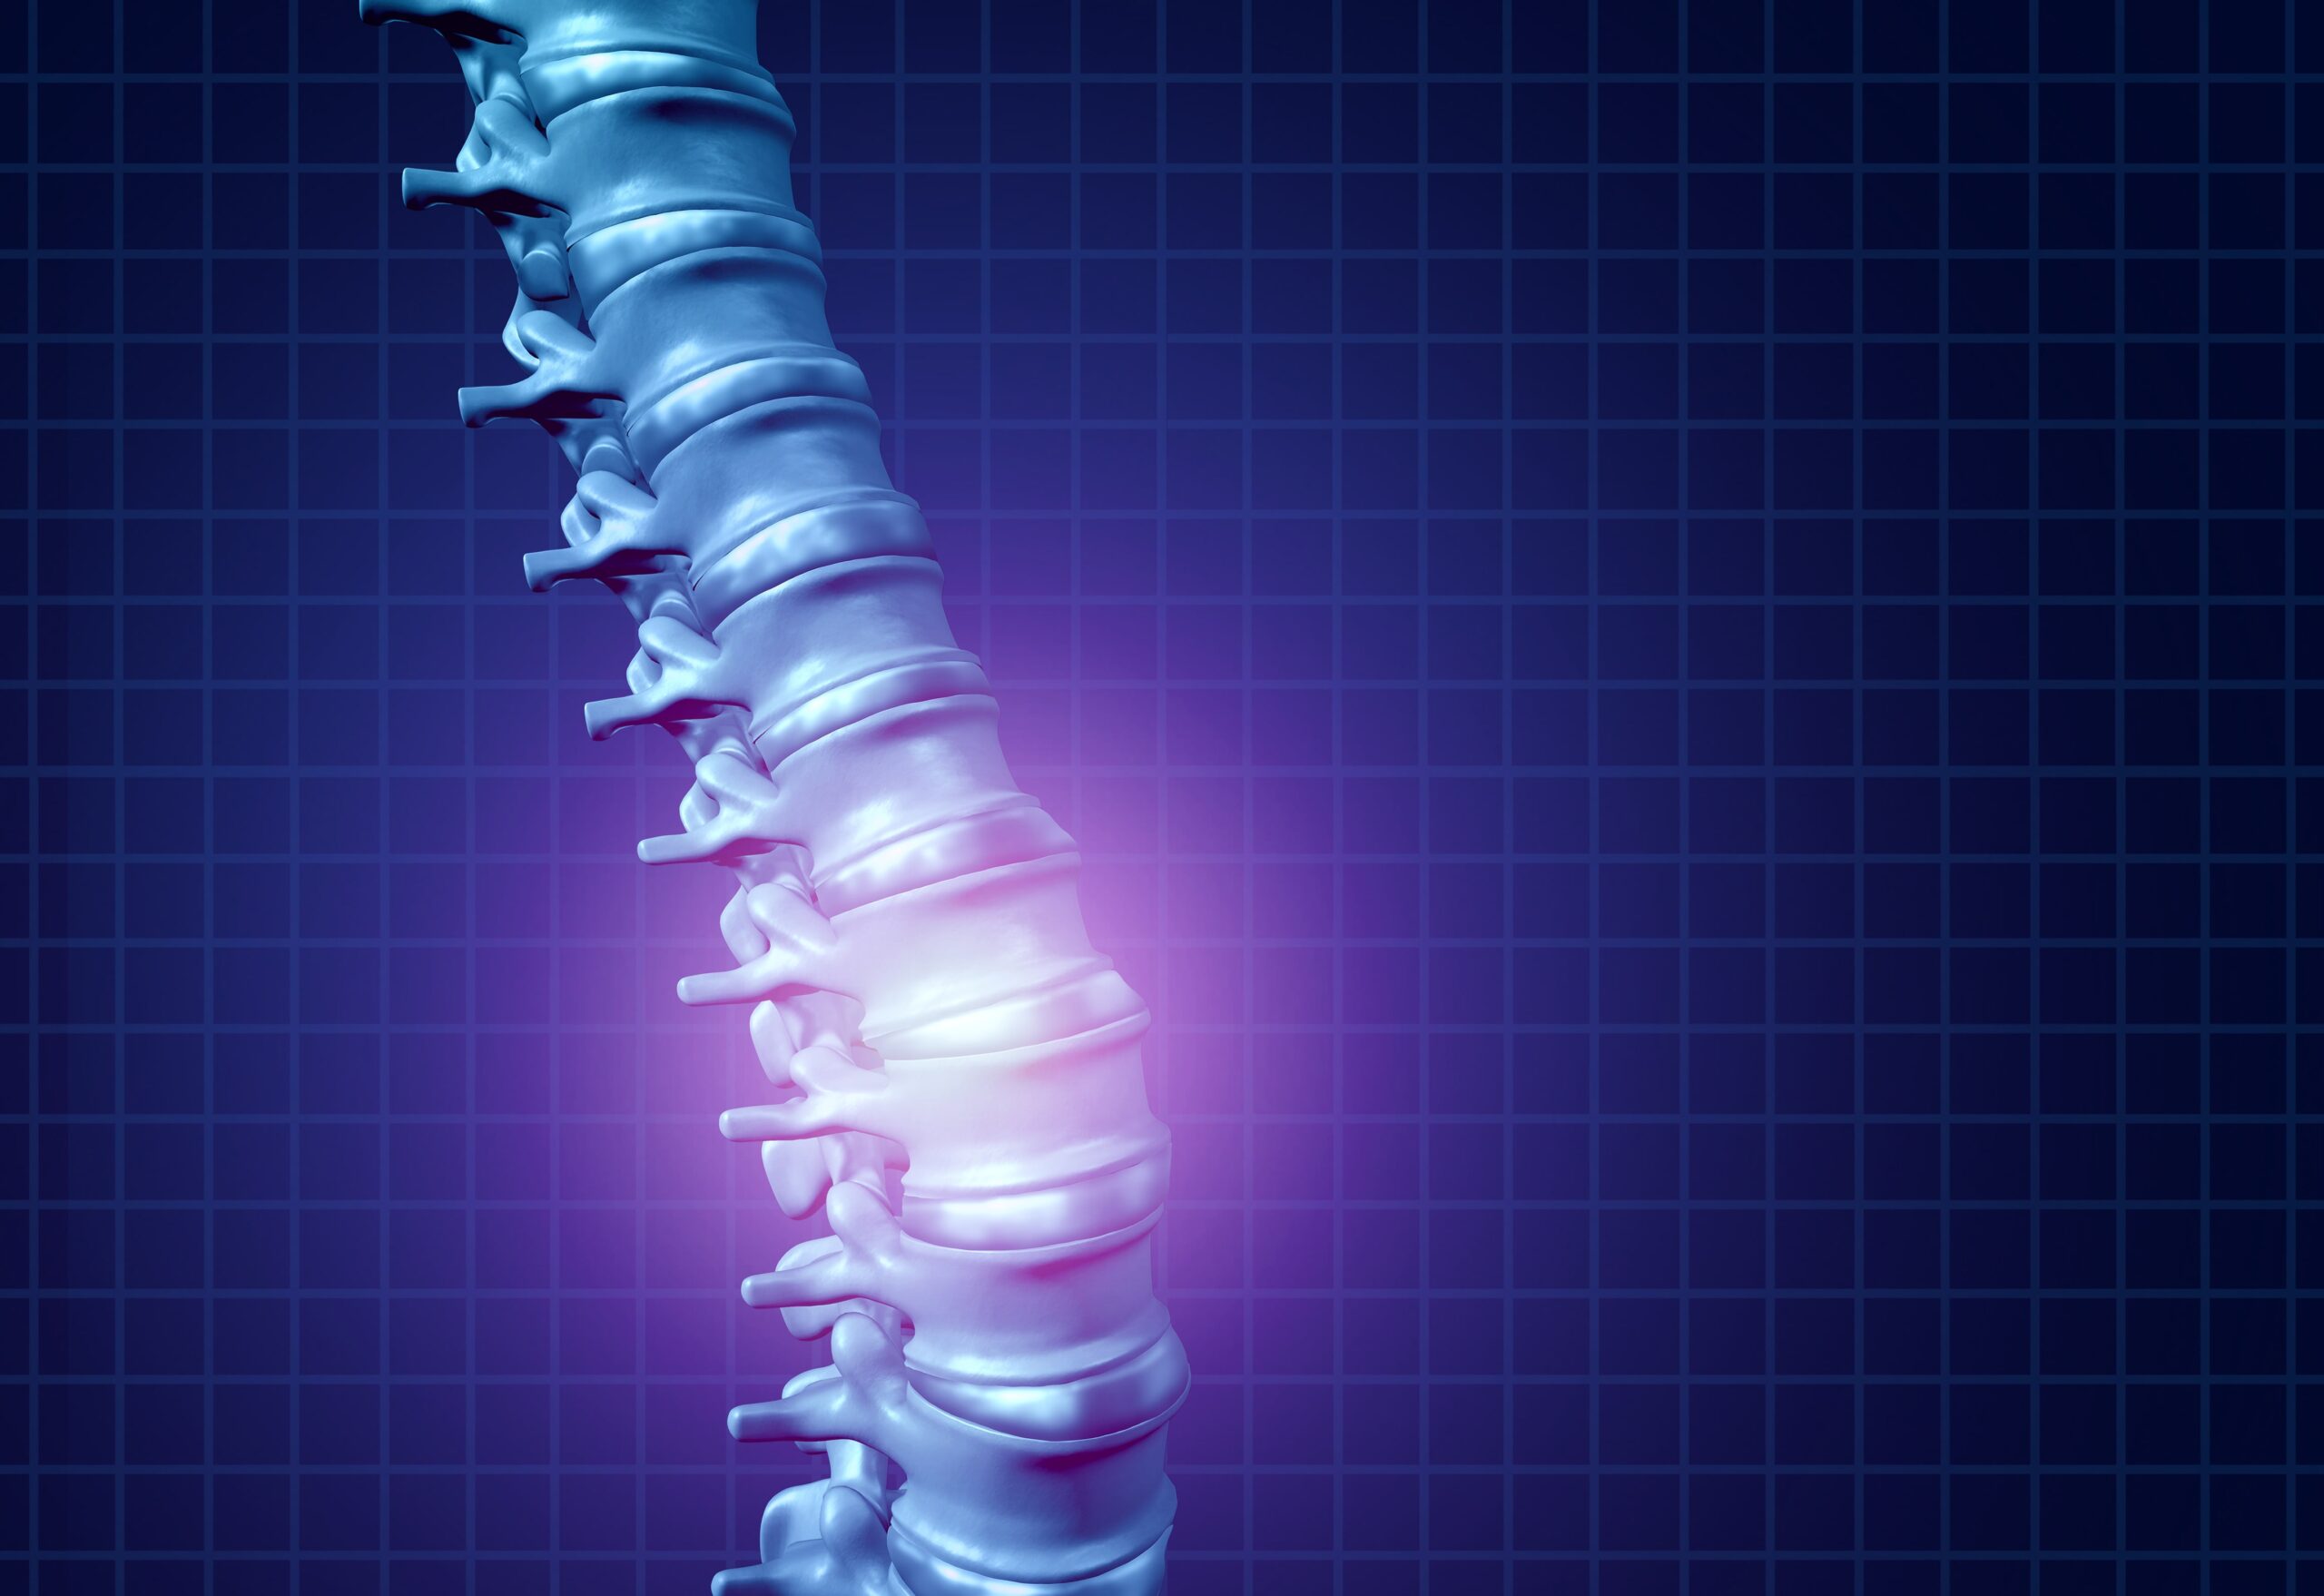 Graphic illustration of spine on purple background